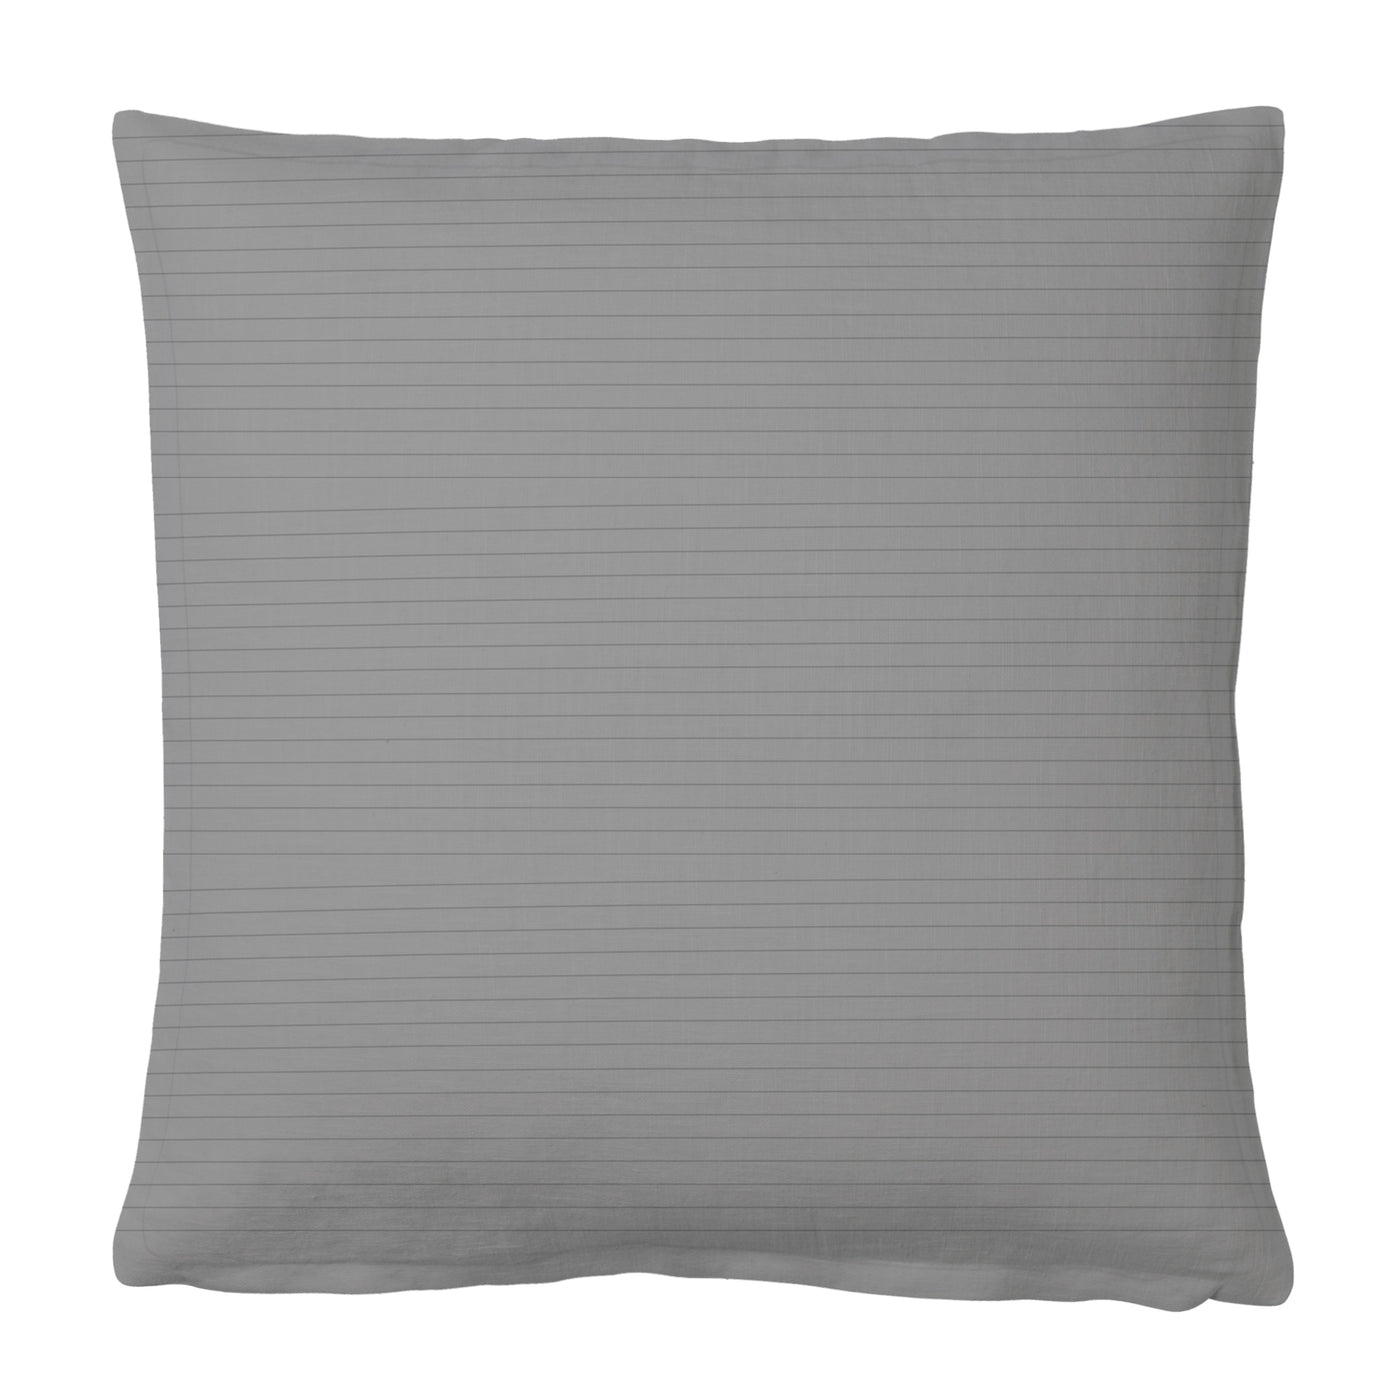 Kodak gray pillow